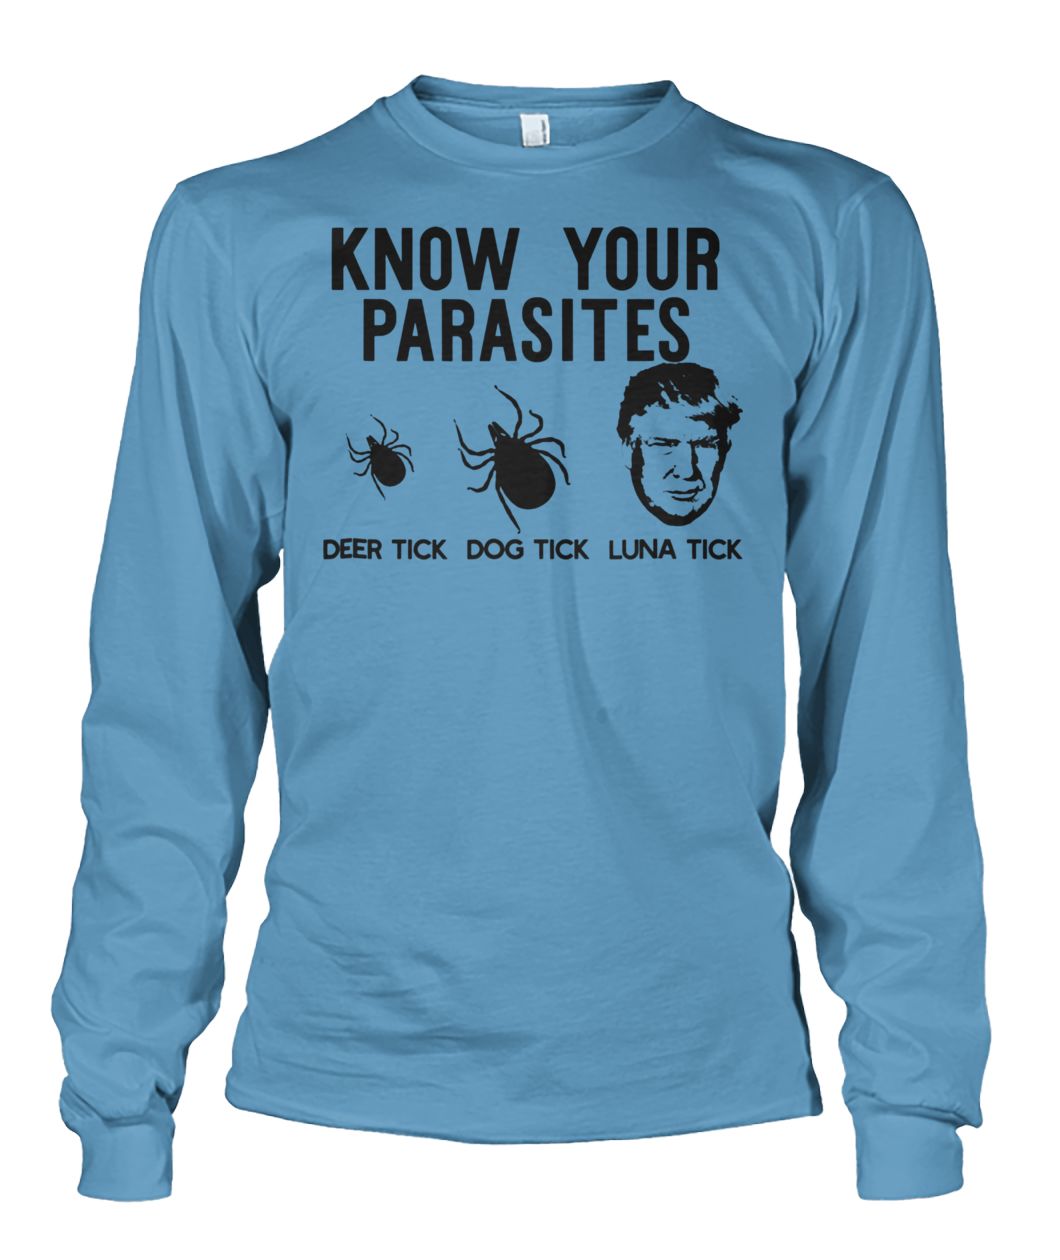 Know your parasites anti-trump af resist unisex long sleeve